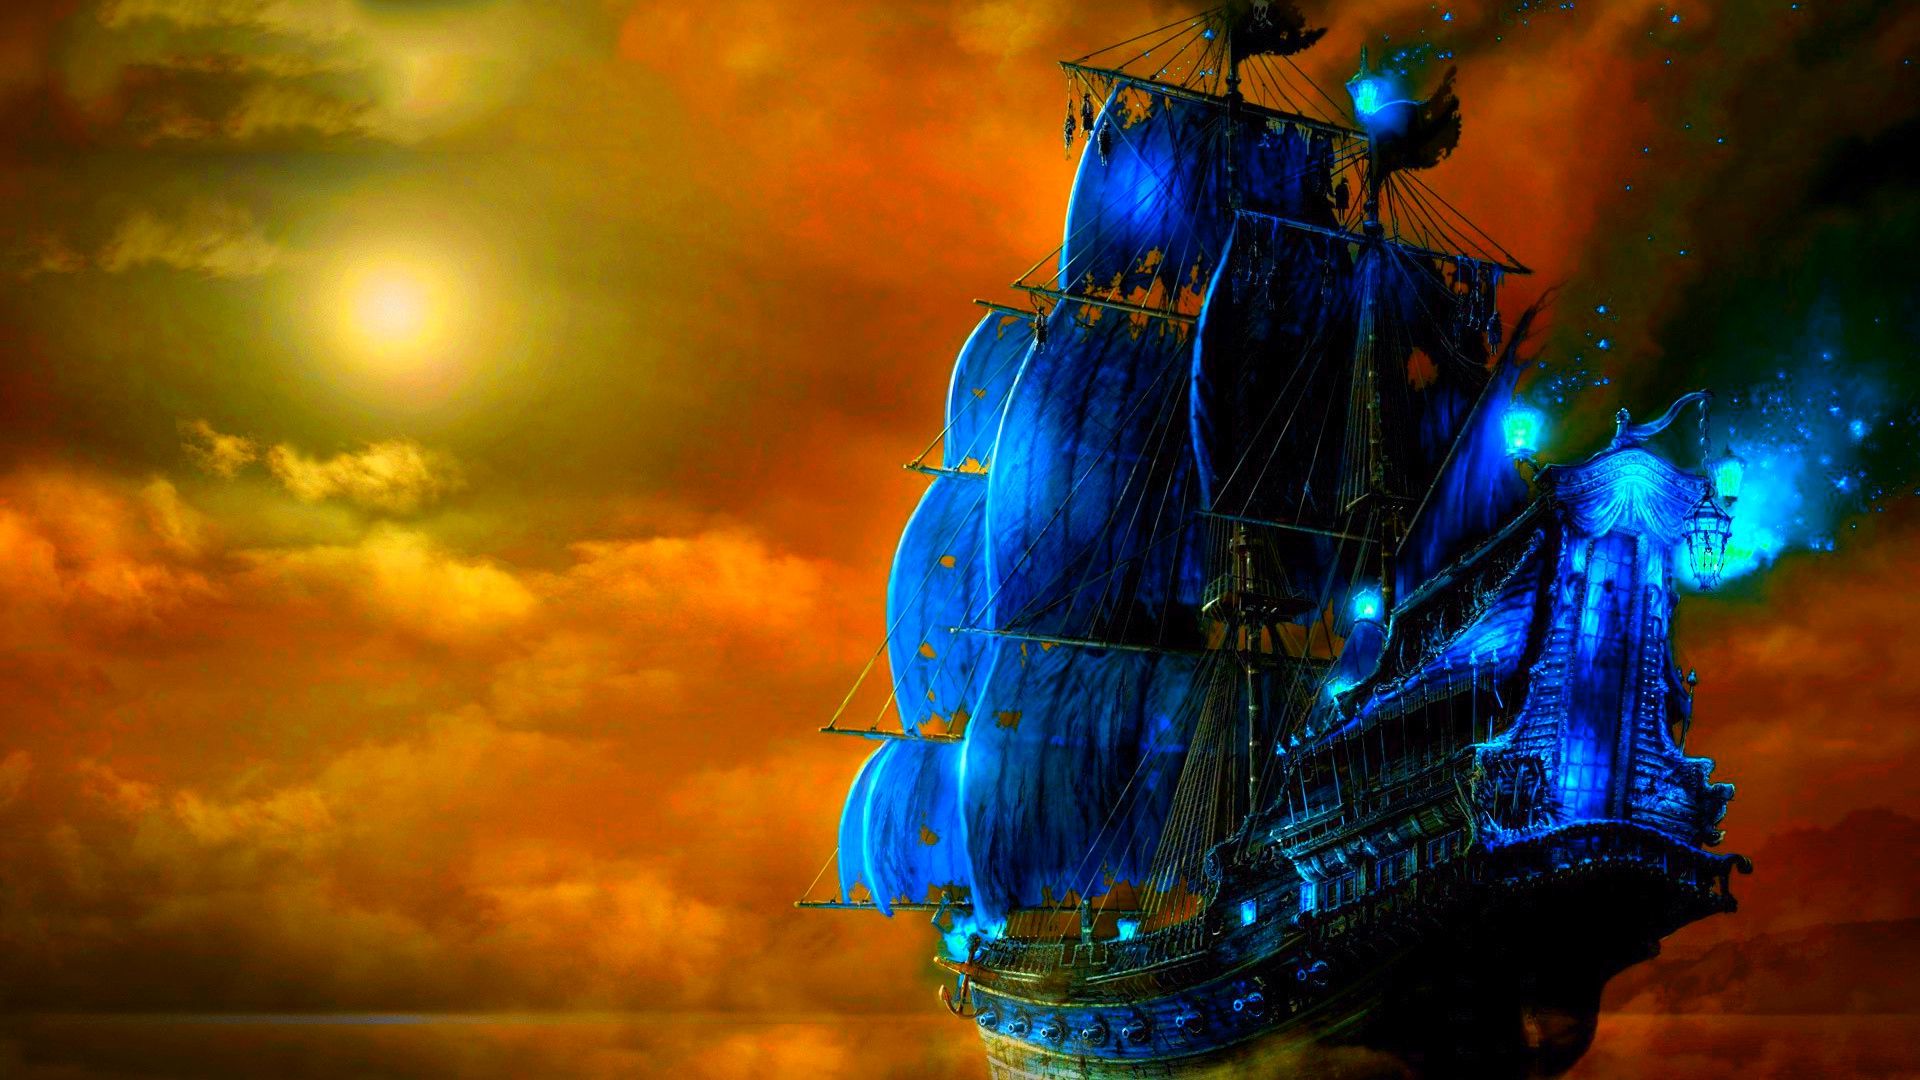 Fantasy art ship boats ocean sea wallpaper 1920x1080 41049